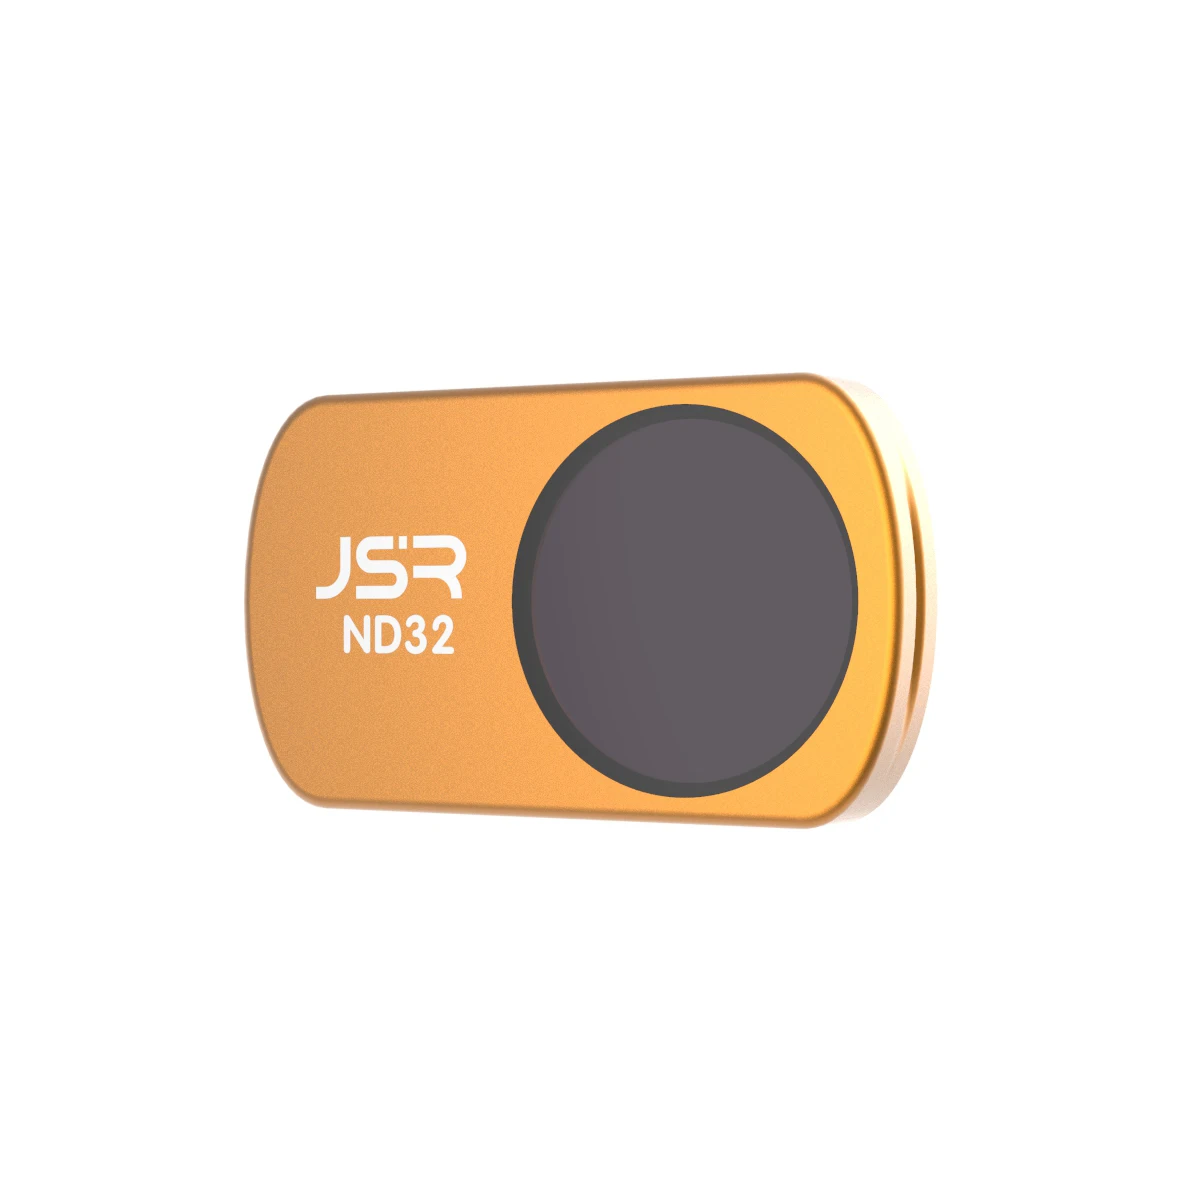 Для радиоуправляемого дрона DJI Mavic мини-Дрон оптический Стекло Камера объектив HD фильтр KitUV CPL STAR ND8/16/32 для DJI Mavic мини Камера аксессуары - Цвет: ND32